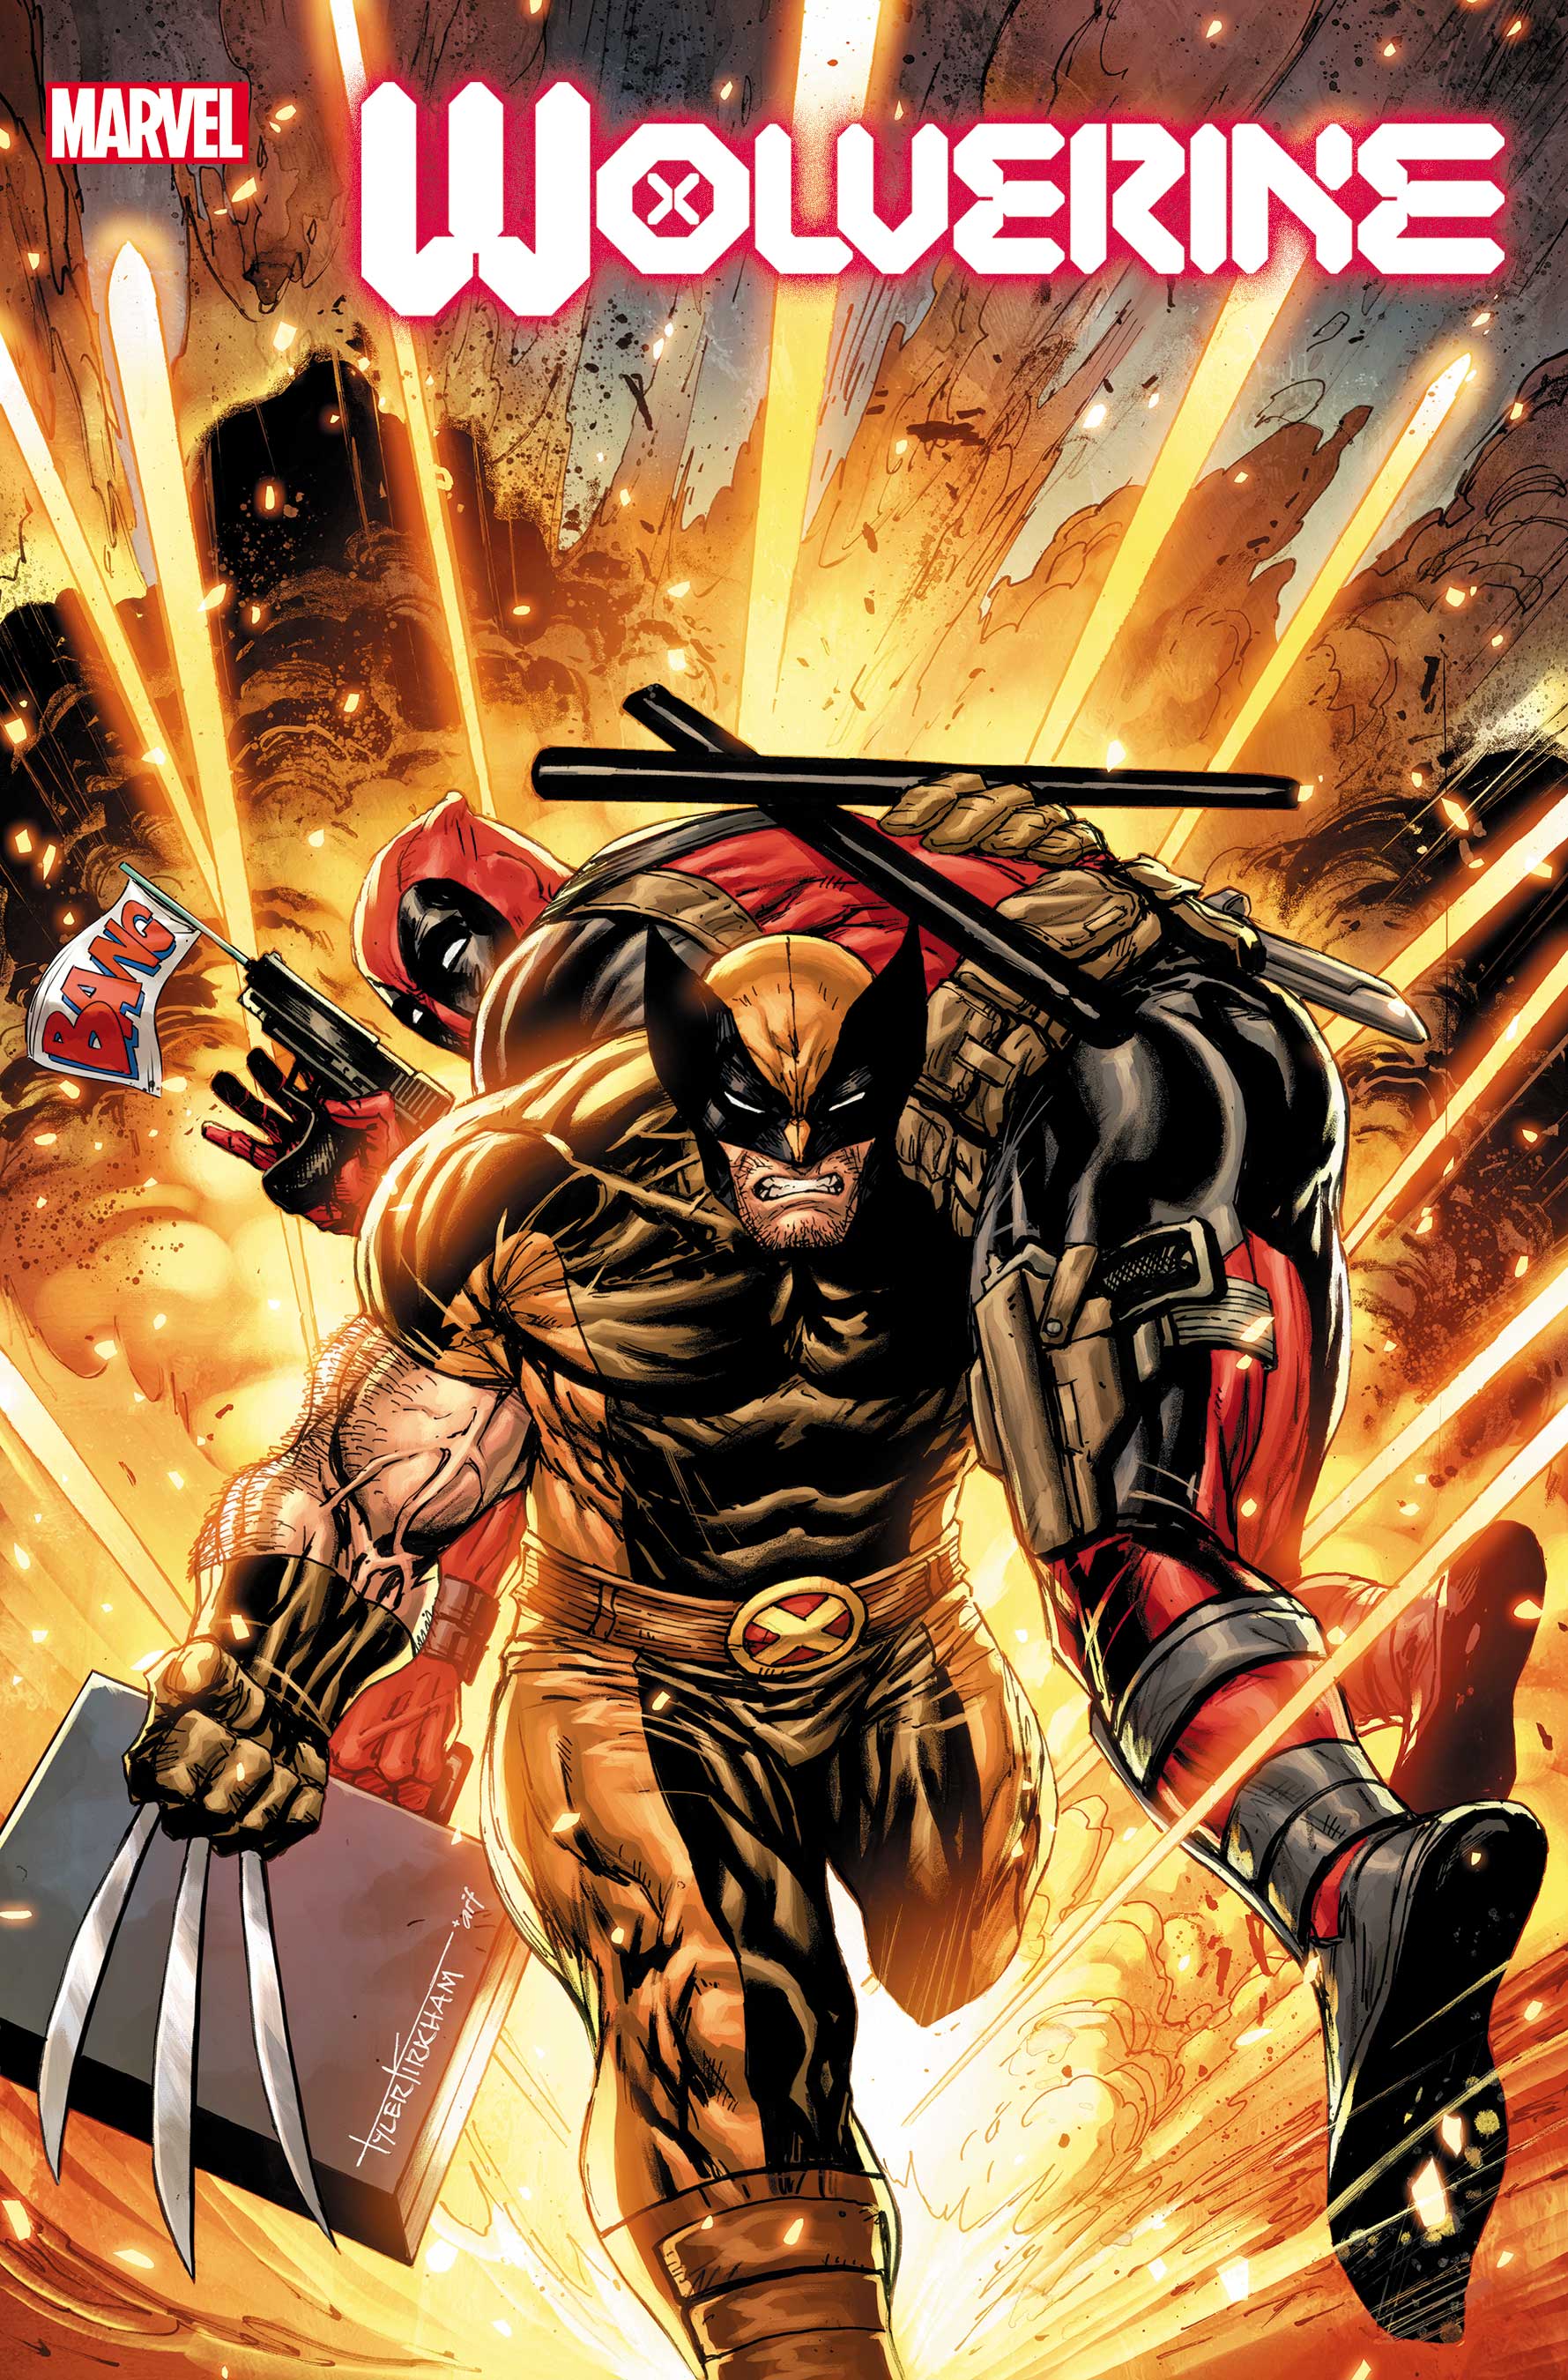 Wolverine (2020) #20 (Variant)